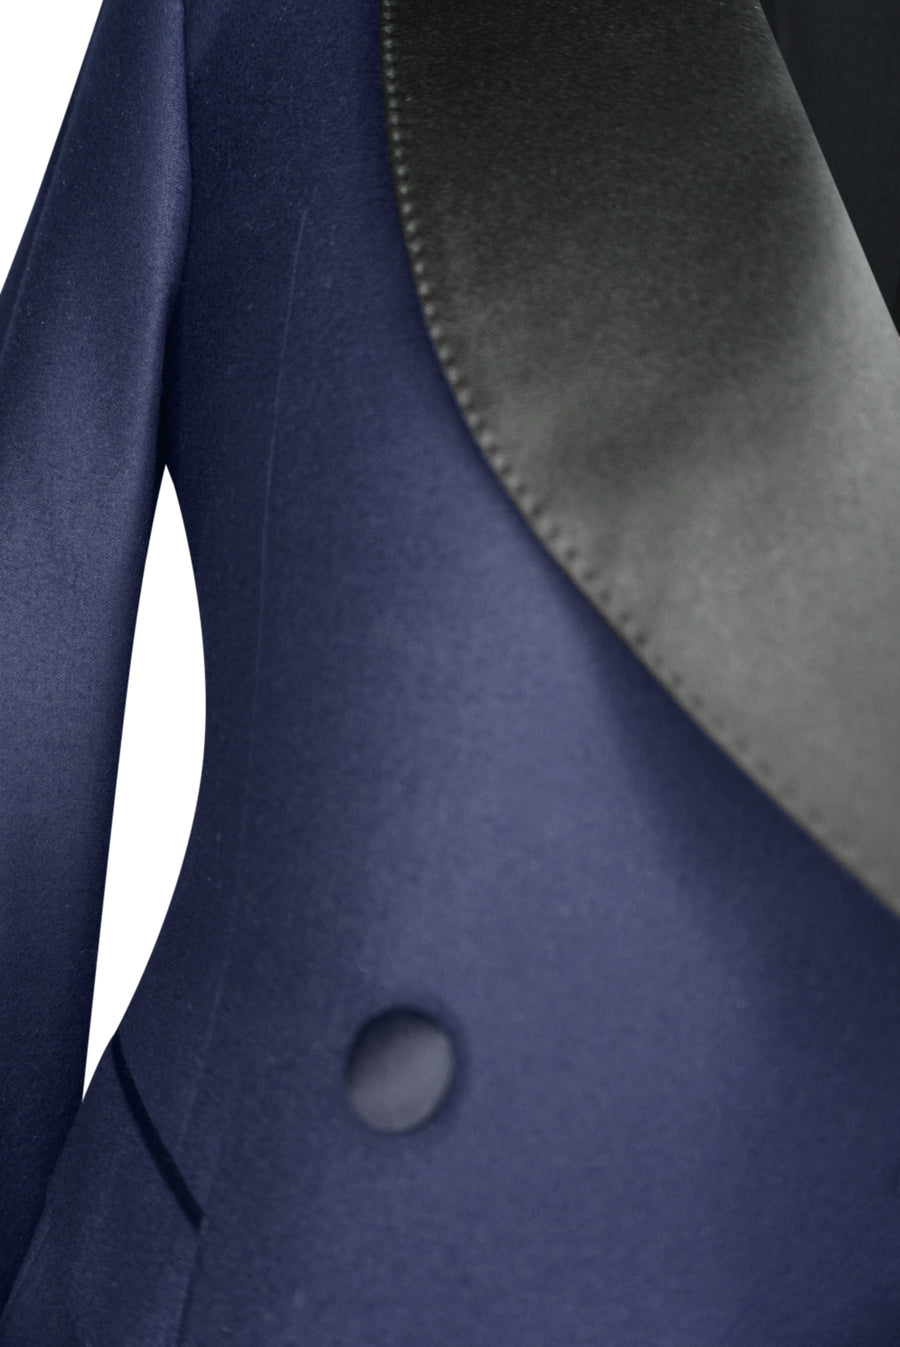 Navy Blue Slim Fit Tuxedo Jacket (Satin Lapel)